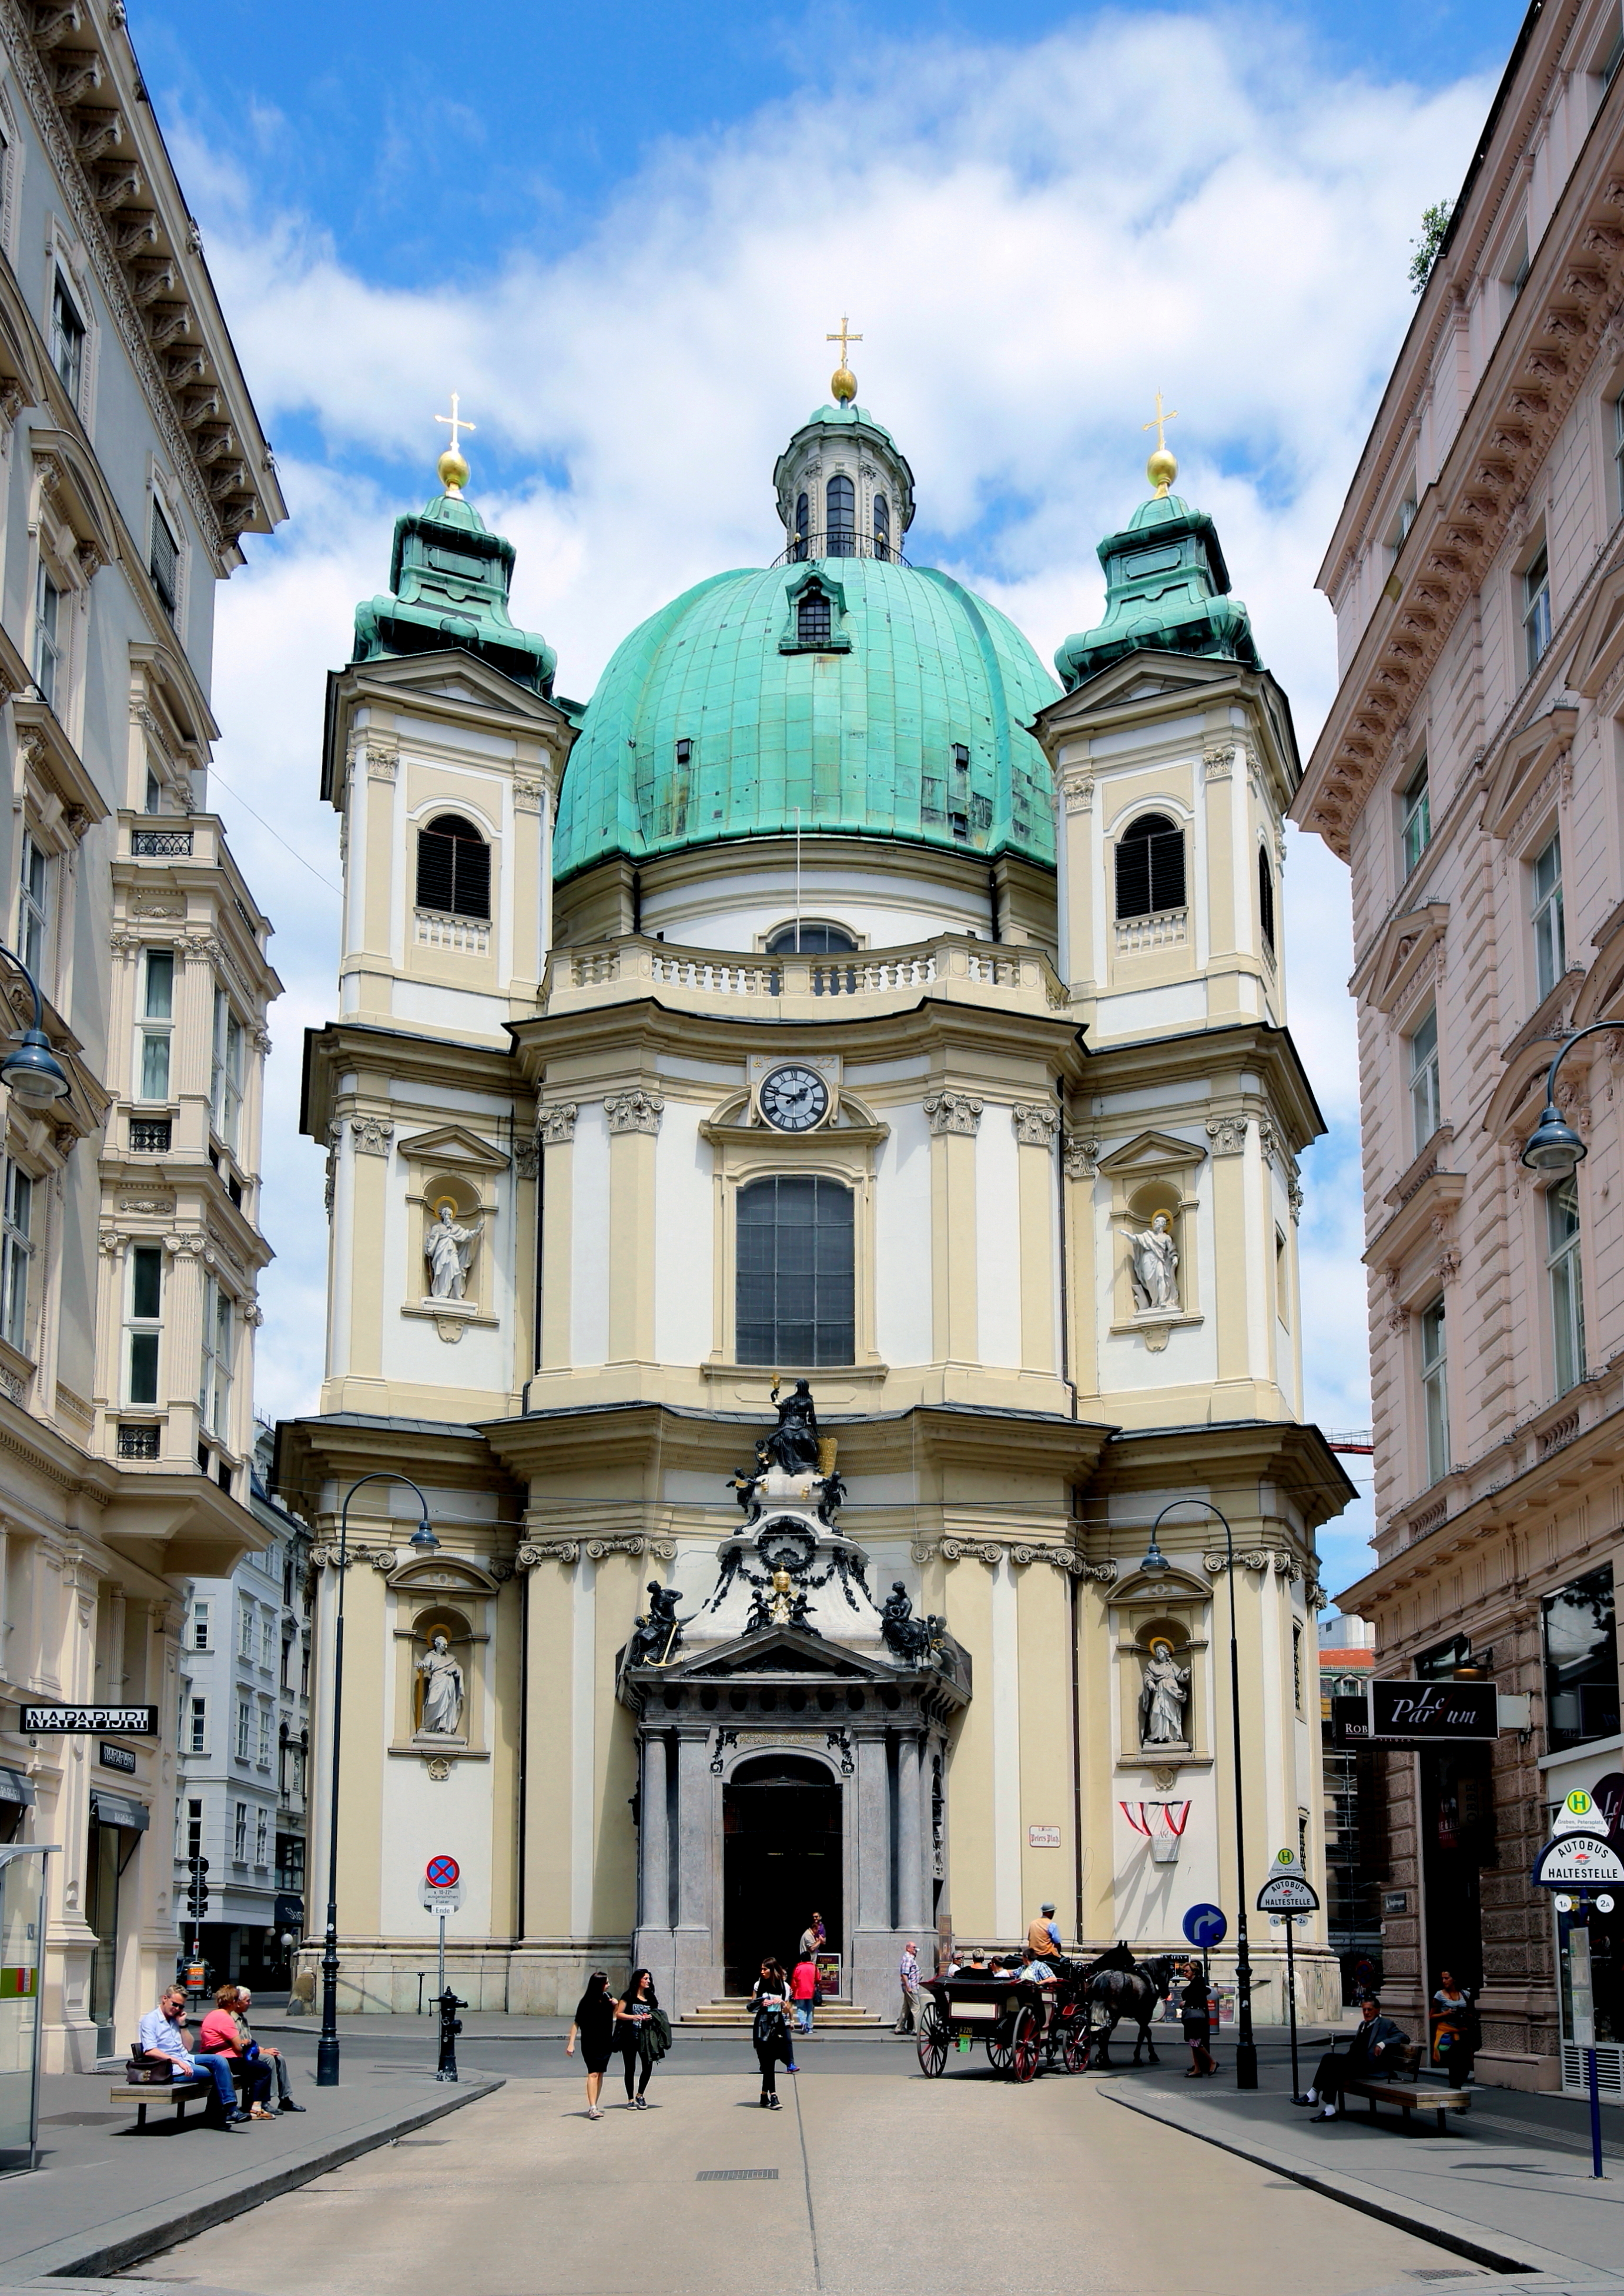 Peterskirche, Vienna - Wikipedia